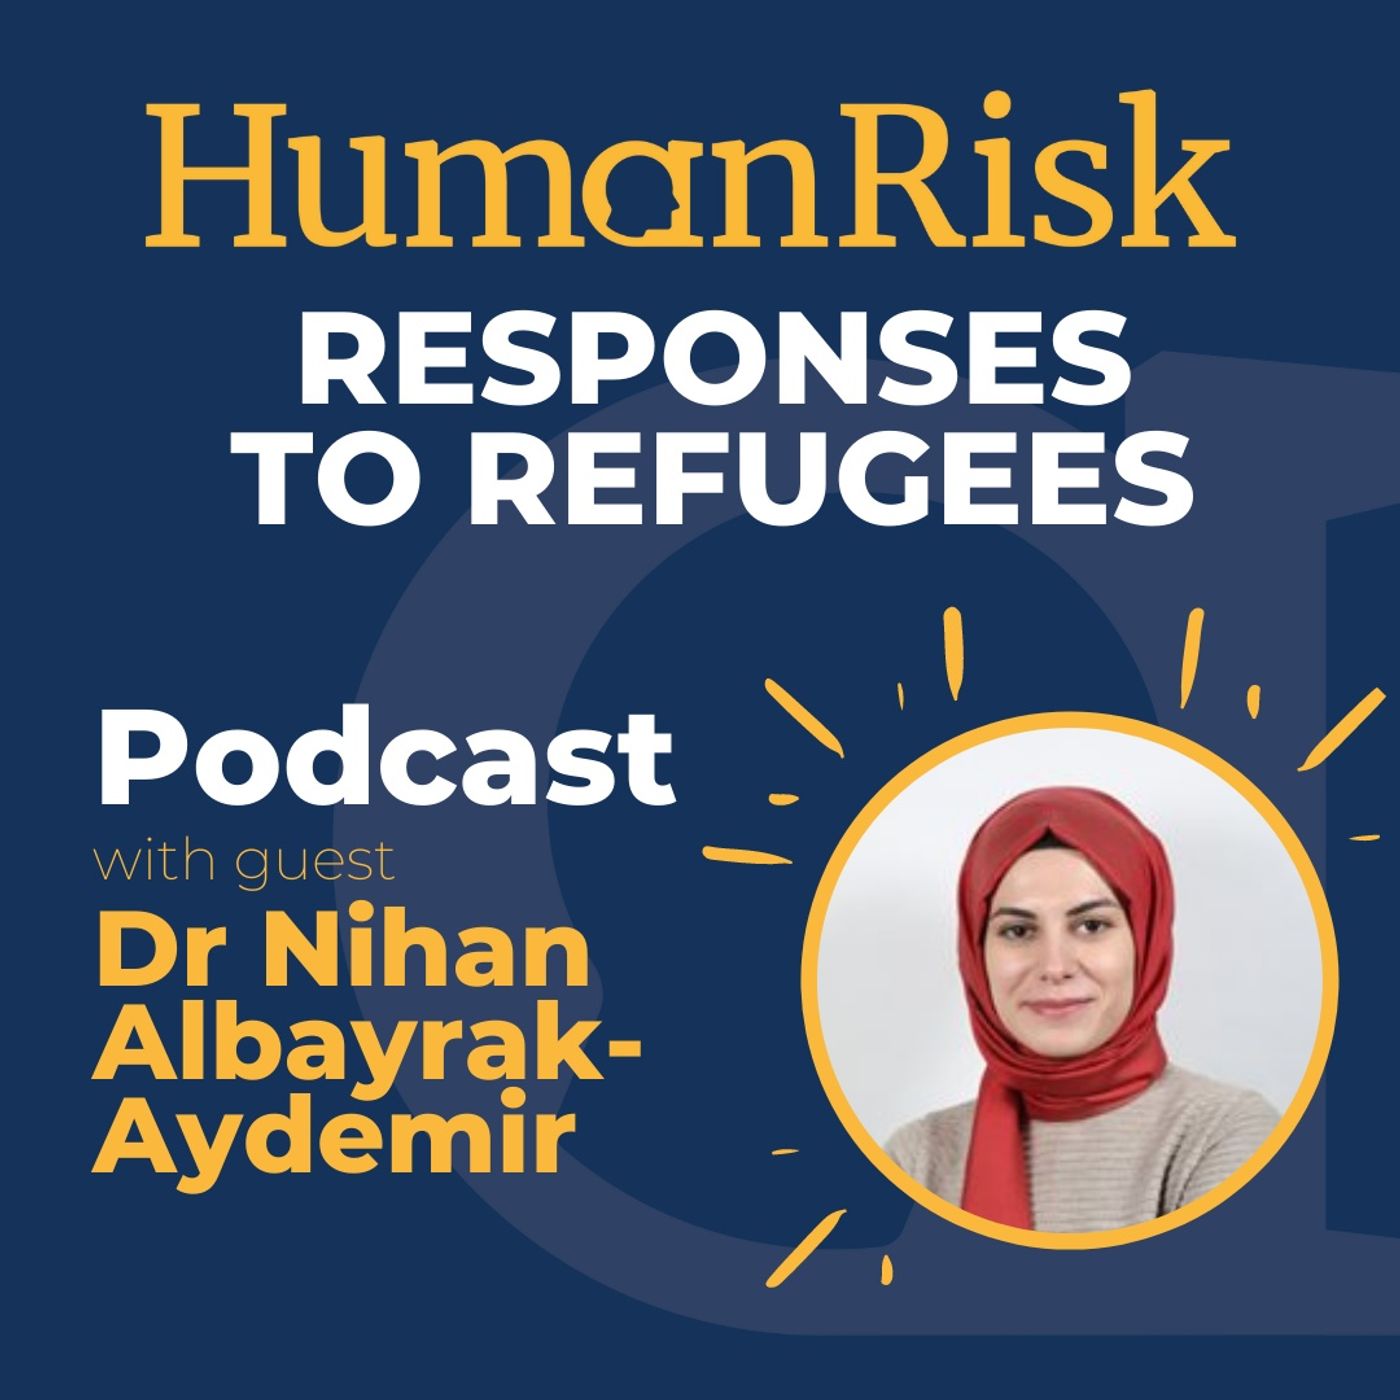 Dr Nihan Albayrak-Aydemir on Responses to Refugees